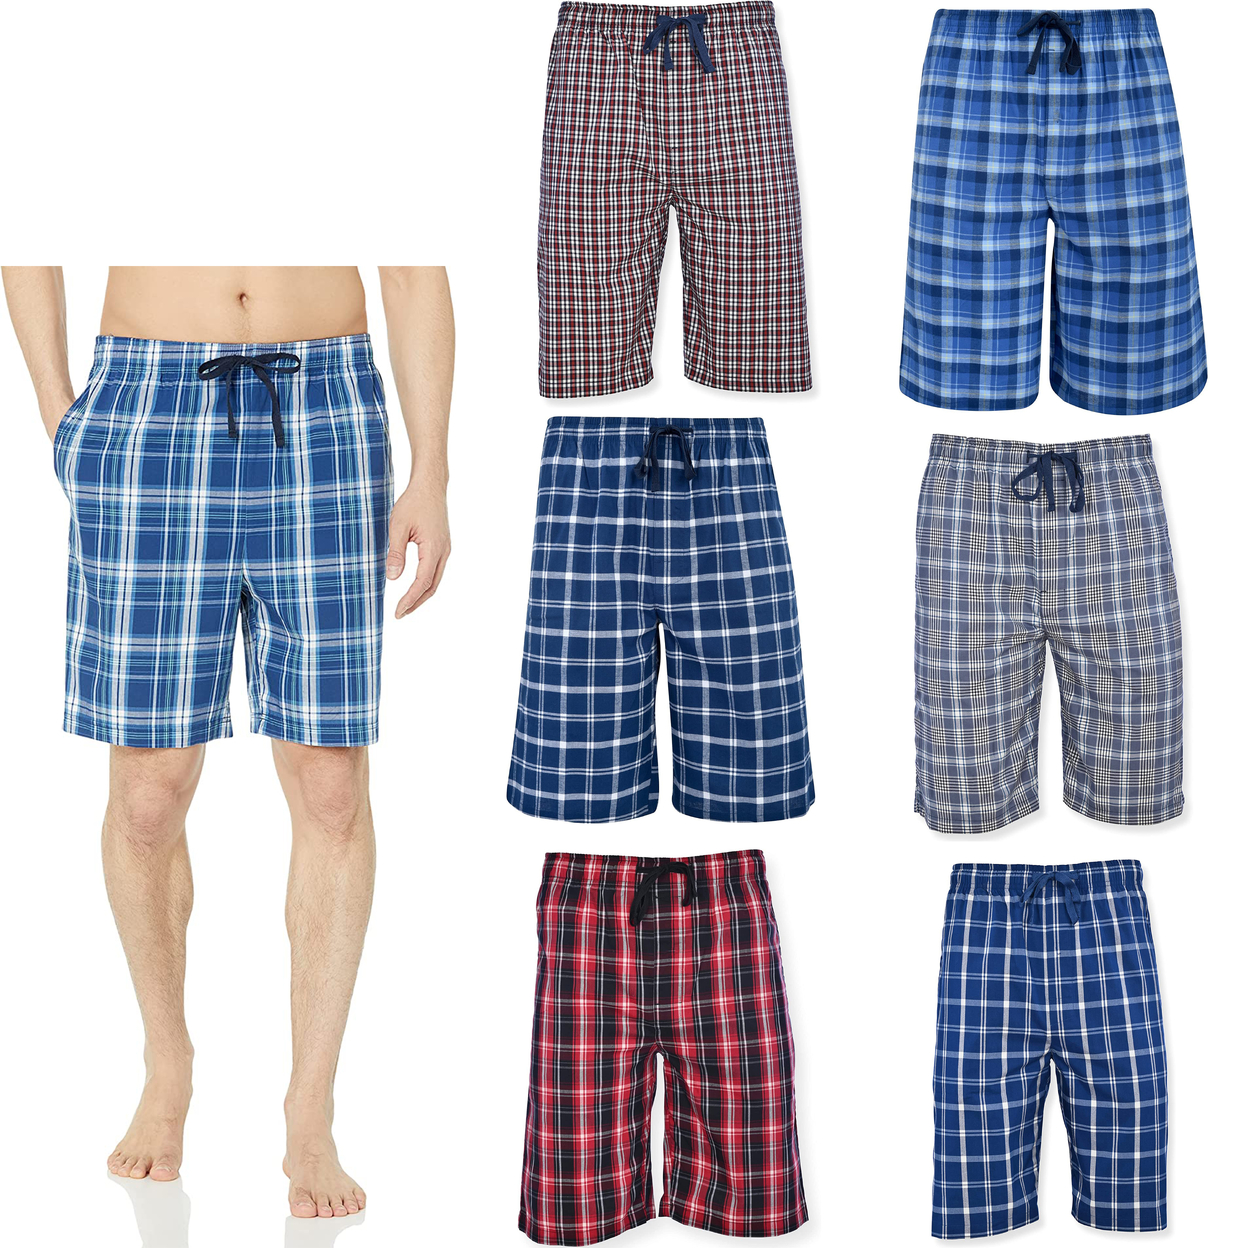 2-Pack: Men's Ultra Soft Plaid Lounge Pajama Sleep Wear Shorts - Black & Tan, Large